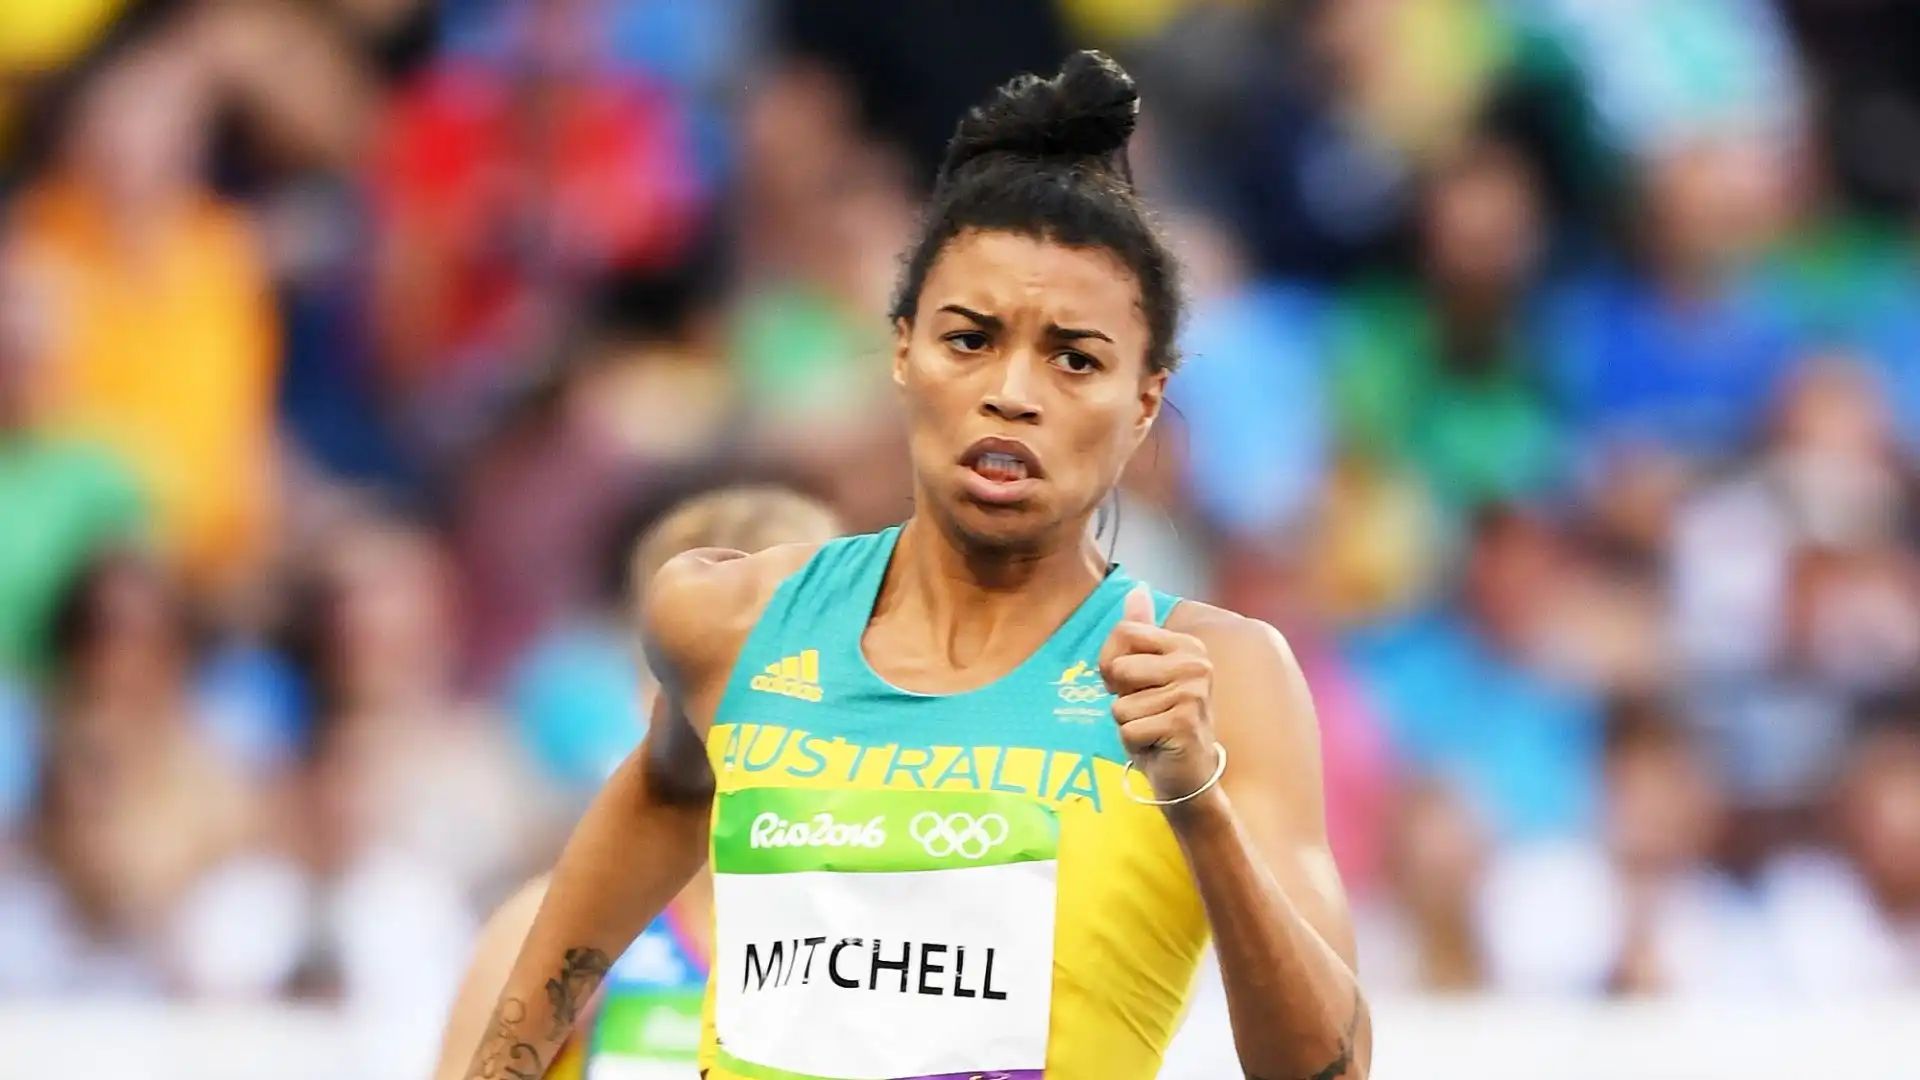 Morgan Mitchell (Atletica, Australia)